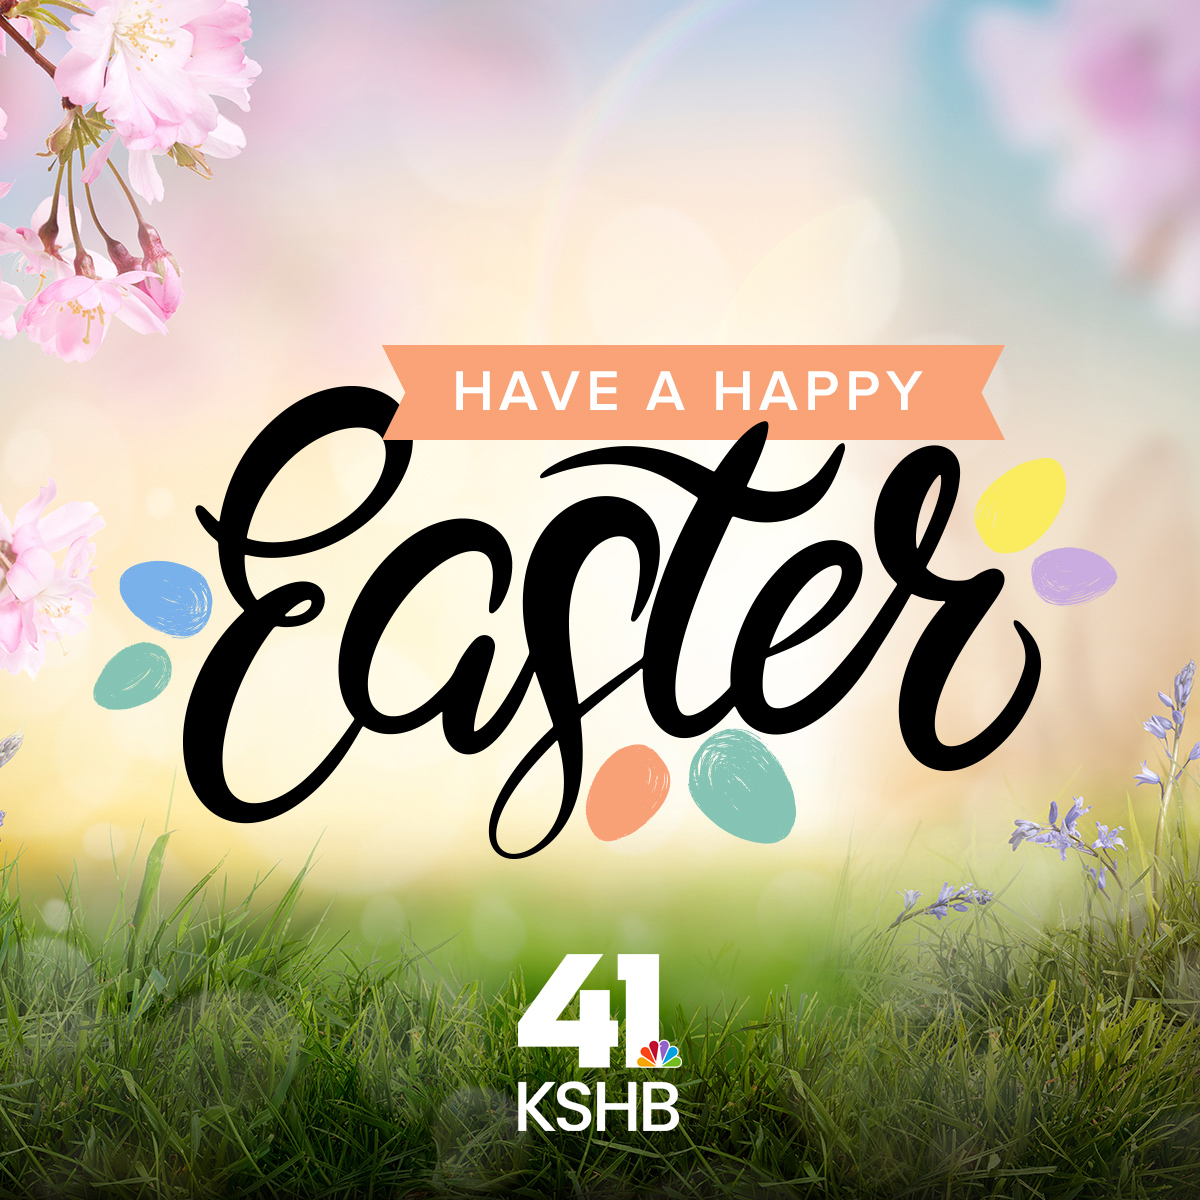 Warmest wishes for a joyful Easter Sunday!